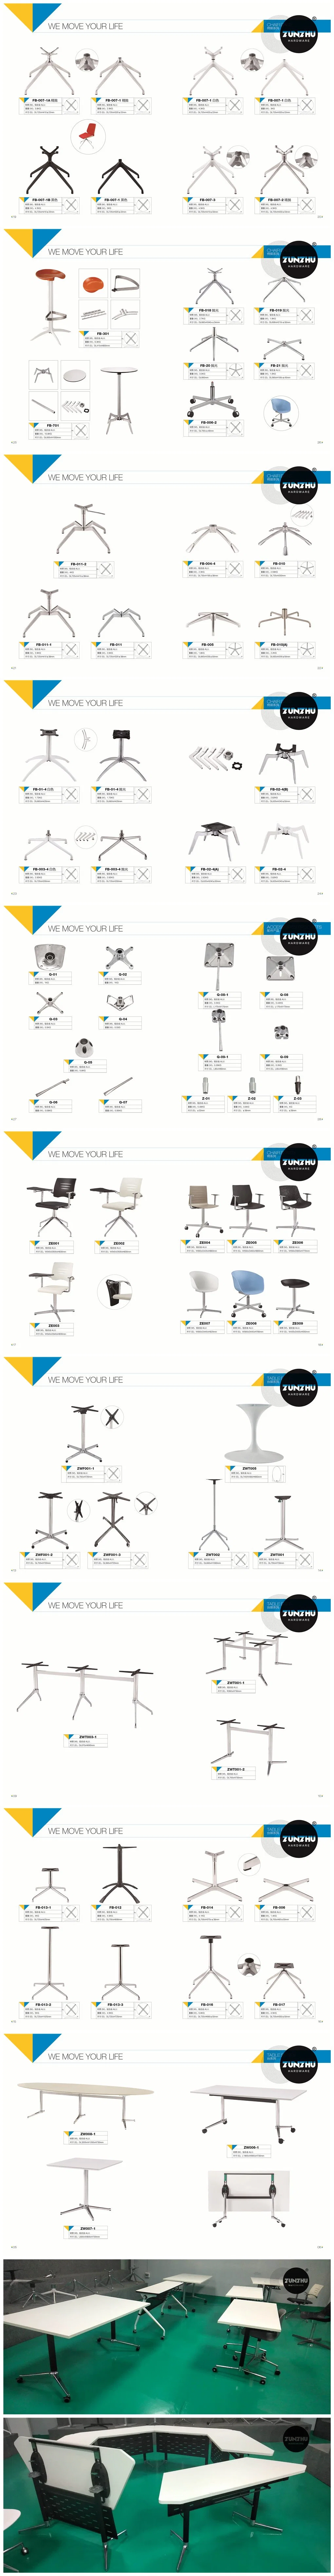 Black Aluminum Alloy Polish Rotation Tray Base for Furniture Parts Office Chair Base Hot Selling Chromium Swivel Chair Base 4 Leg Chair Base